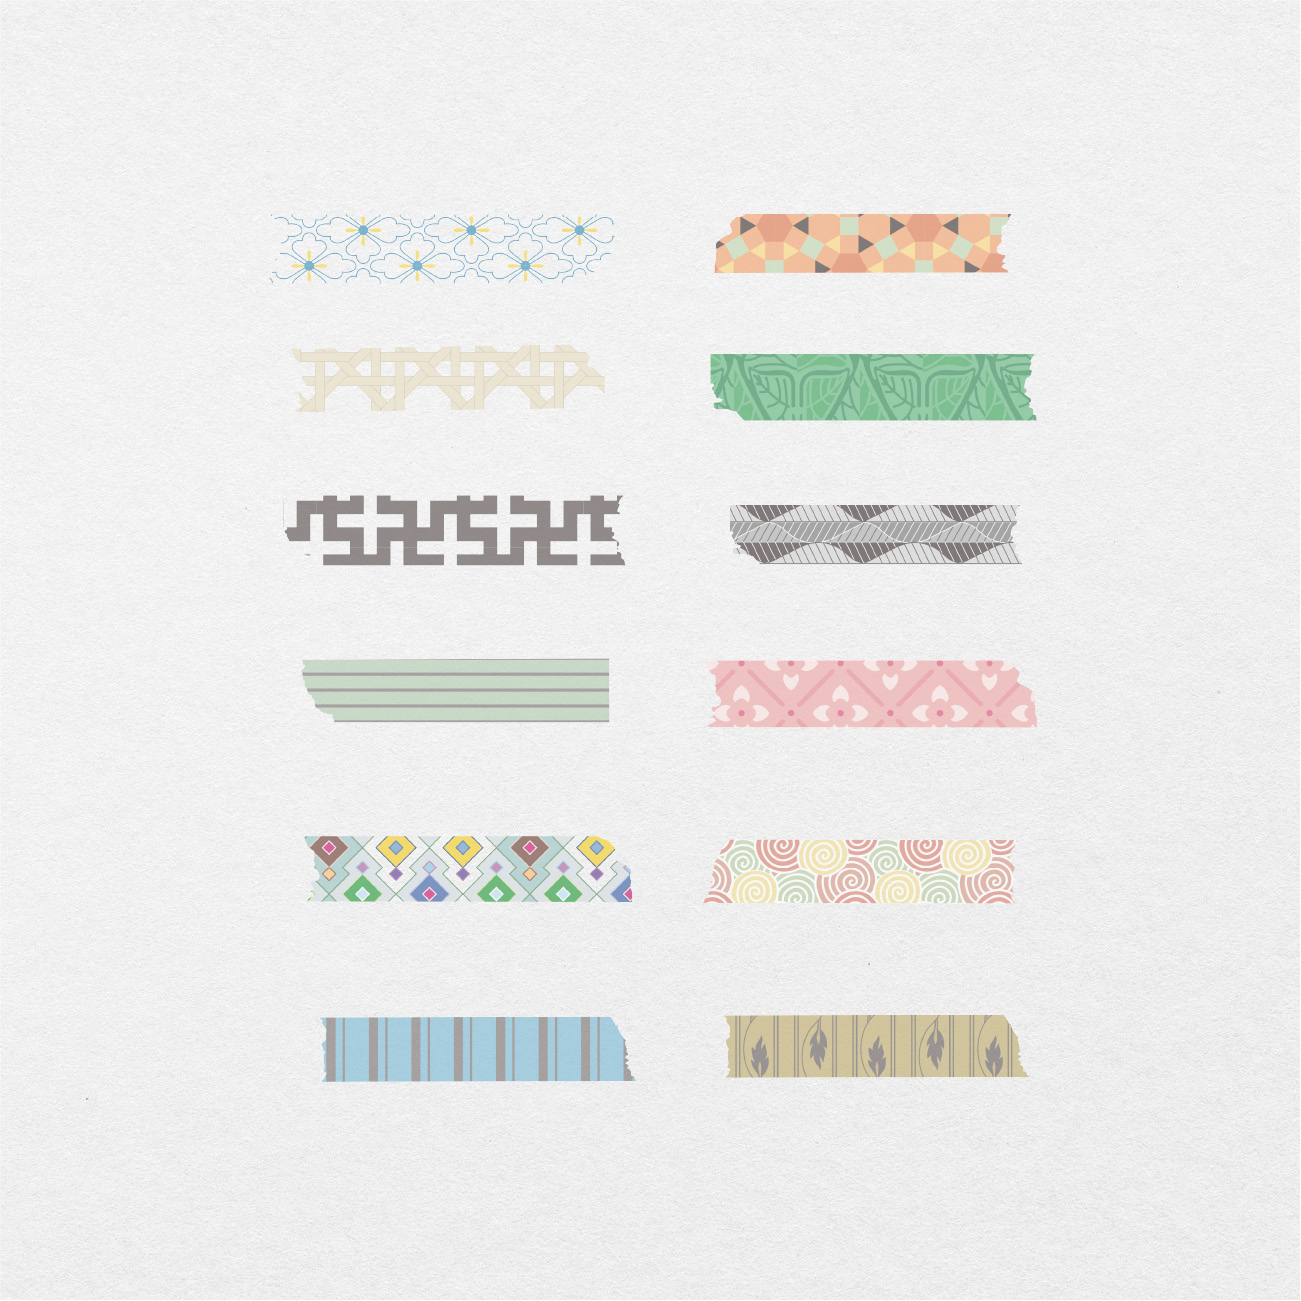 120 Digital Washi Tapes Sticker Bundle - Stationery Pal